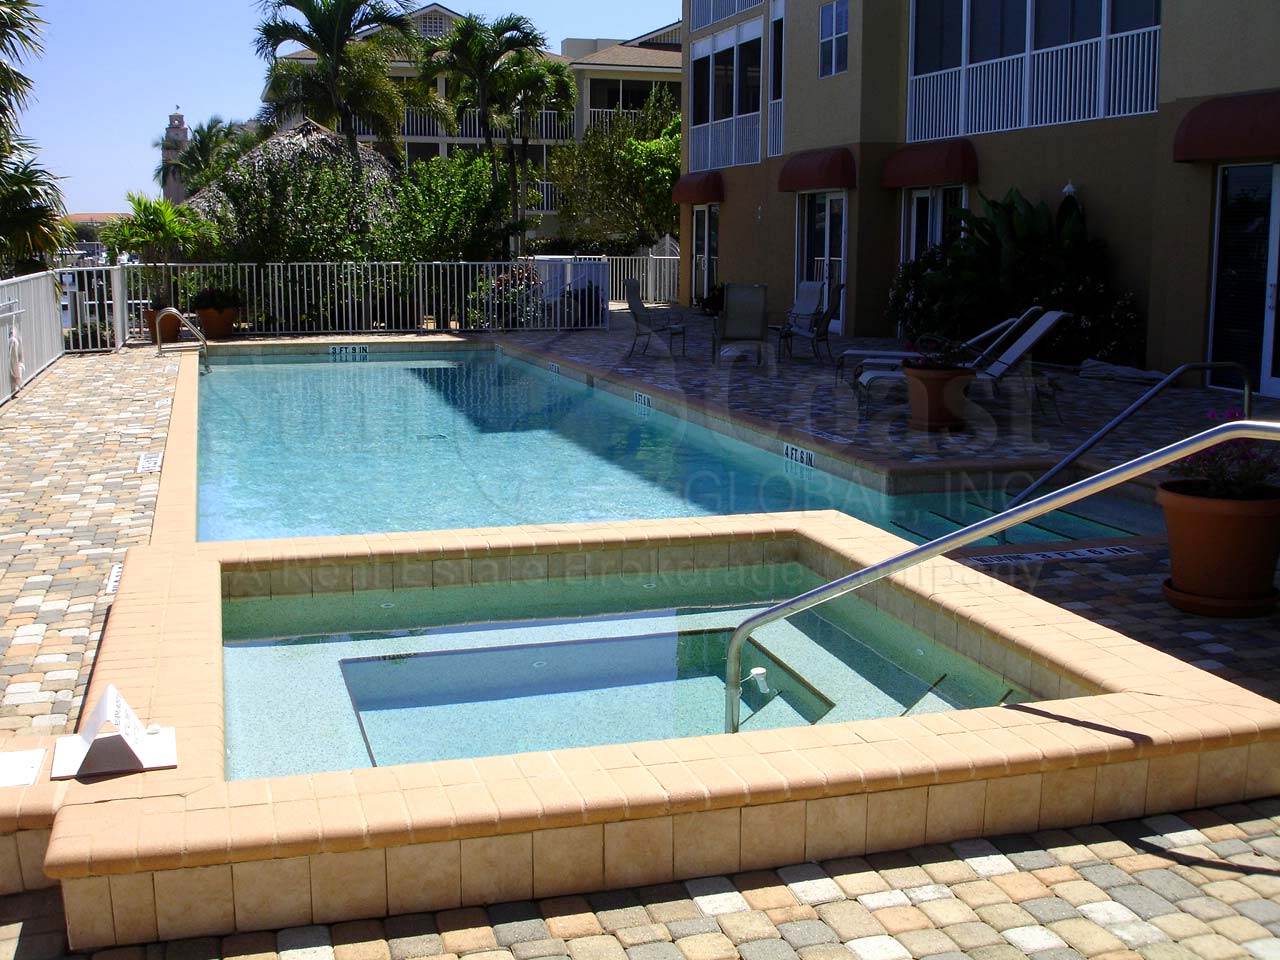 Manatee Resort Community Pool and Hot Tub